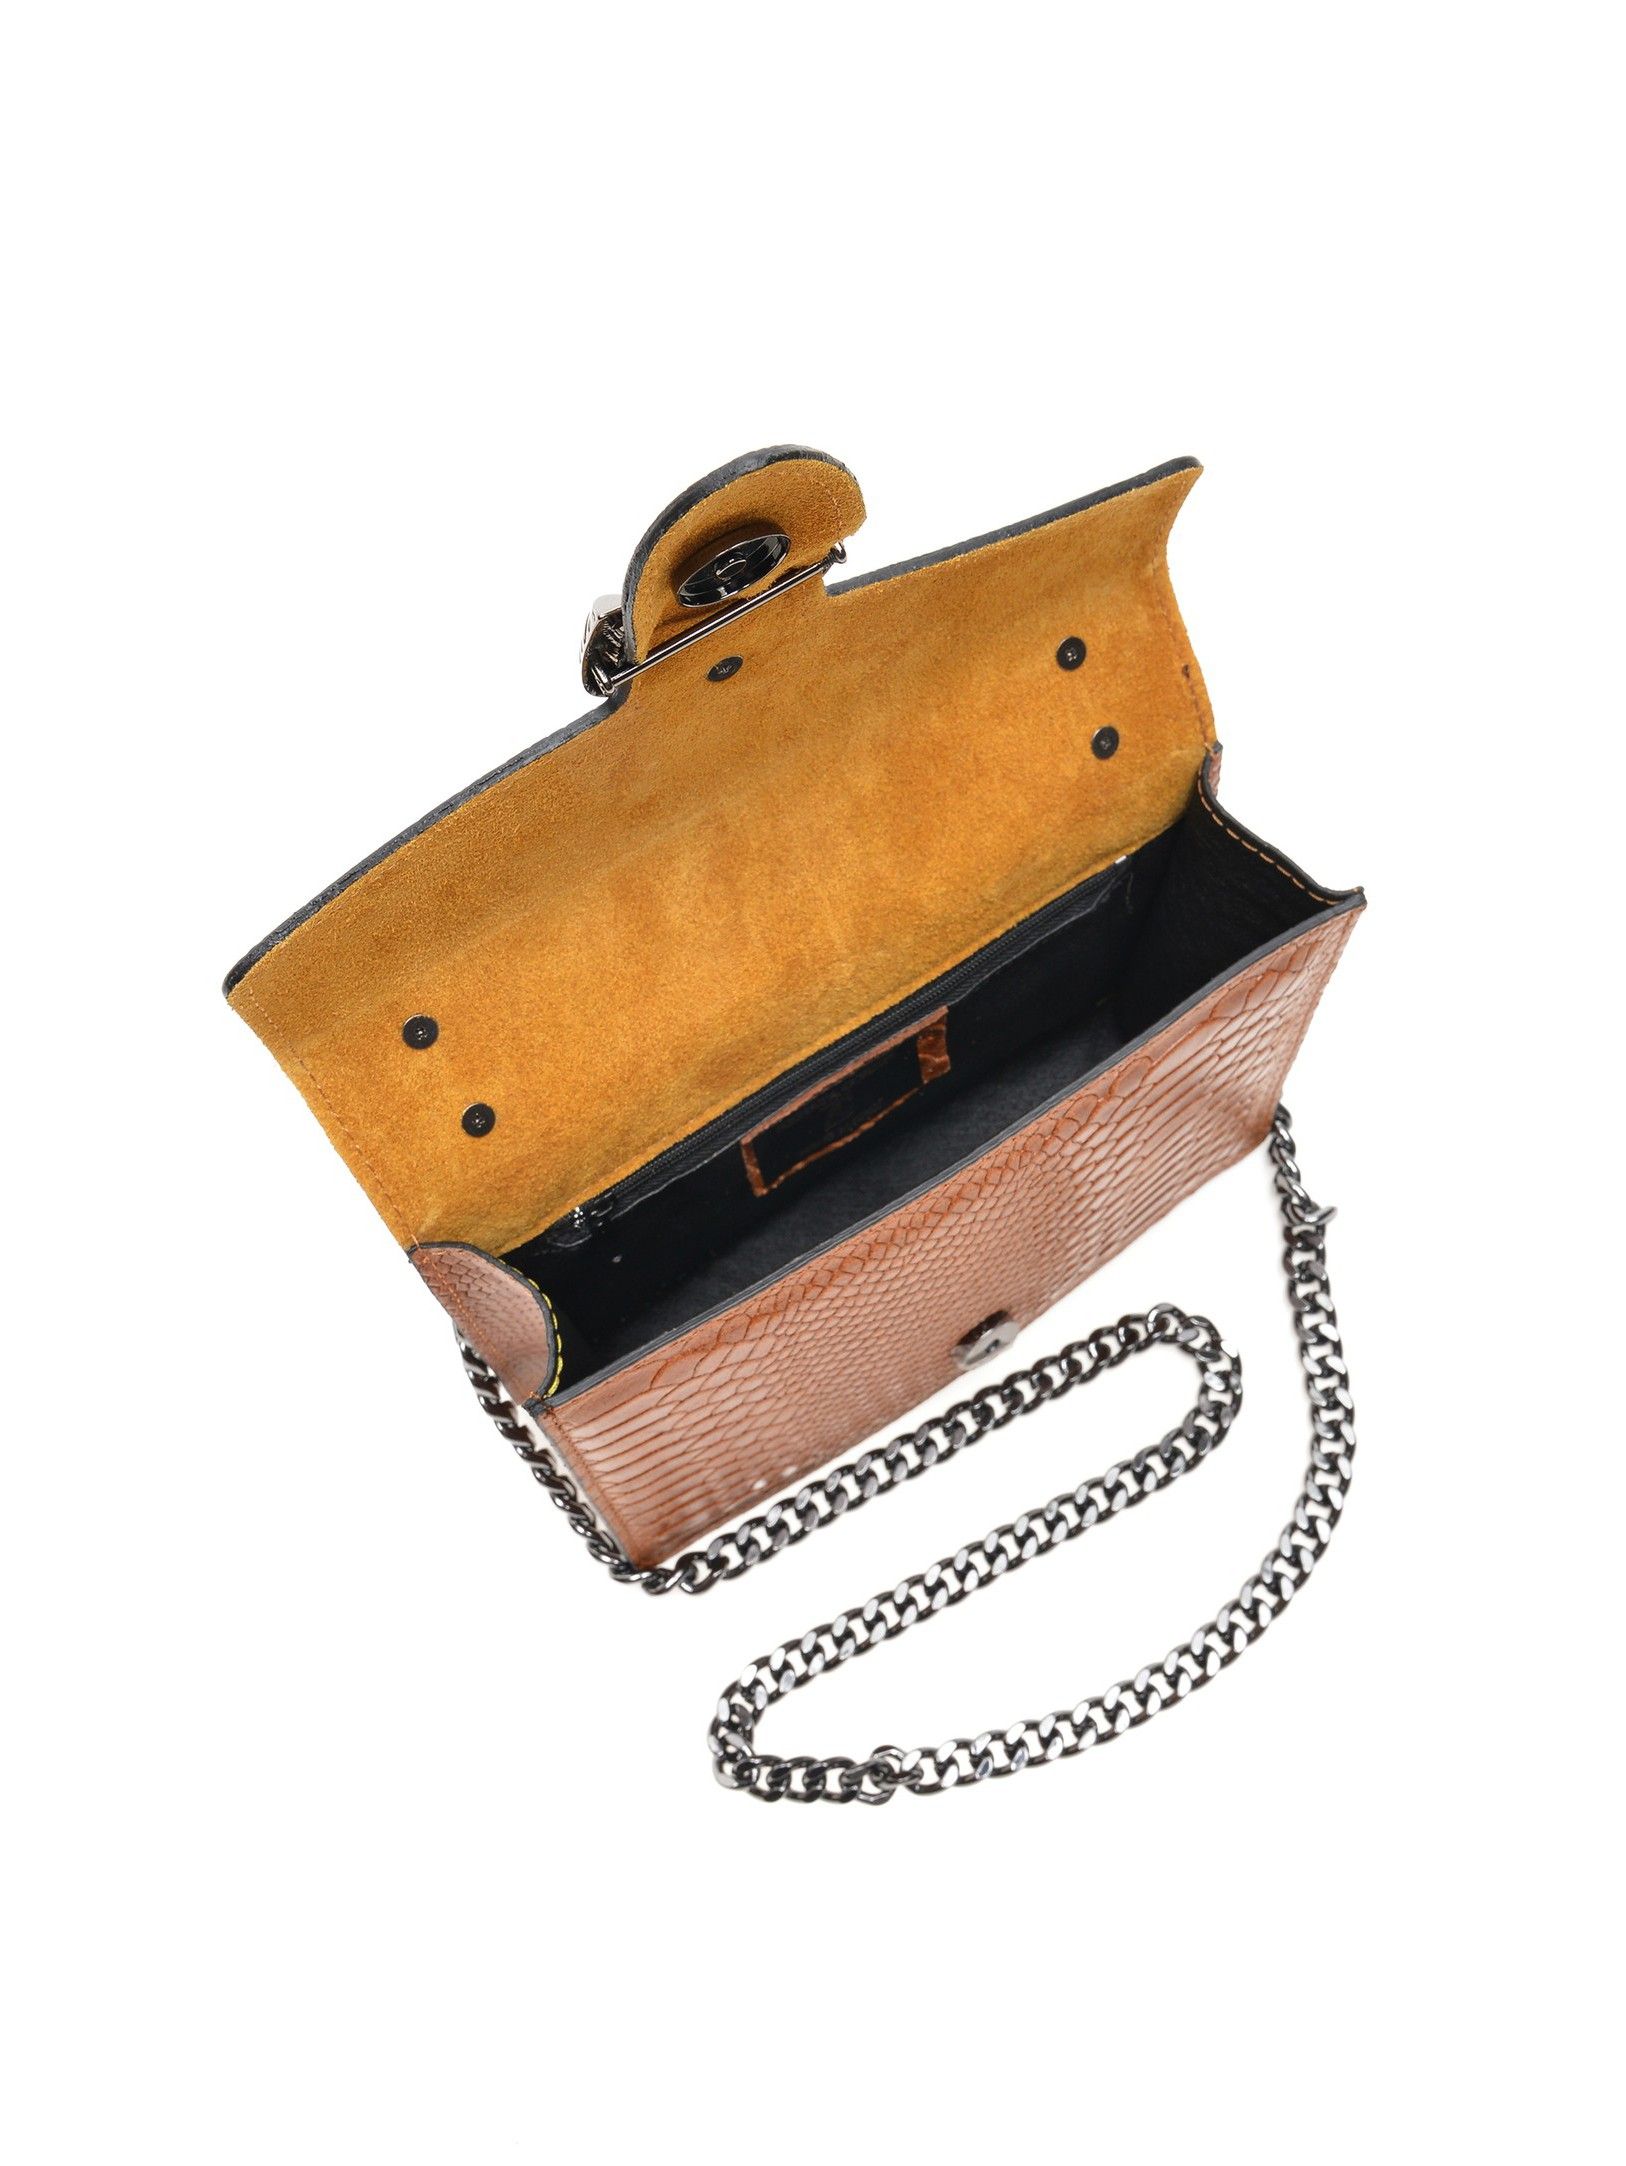 Shoulder Bag
100% cow leather
Flap over with magnetic snap closure
Interior zip pocket
Back zip pocket
Front metal horseshoe detail
Chain strap: 70 cm
Dimensions: 16.5x23x7cm